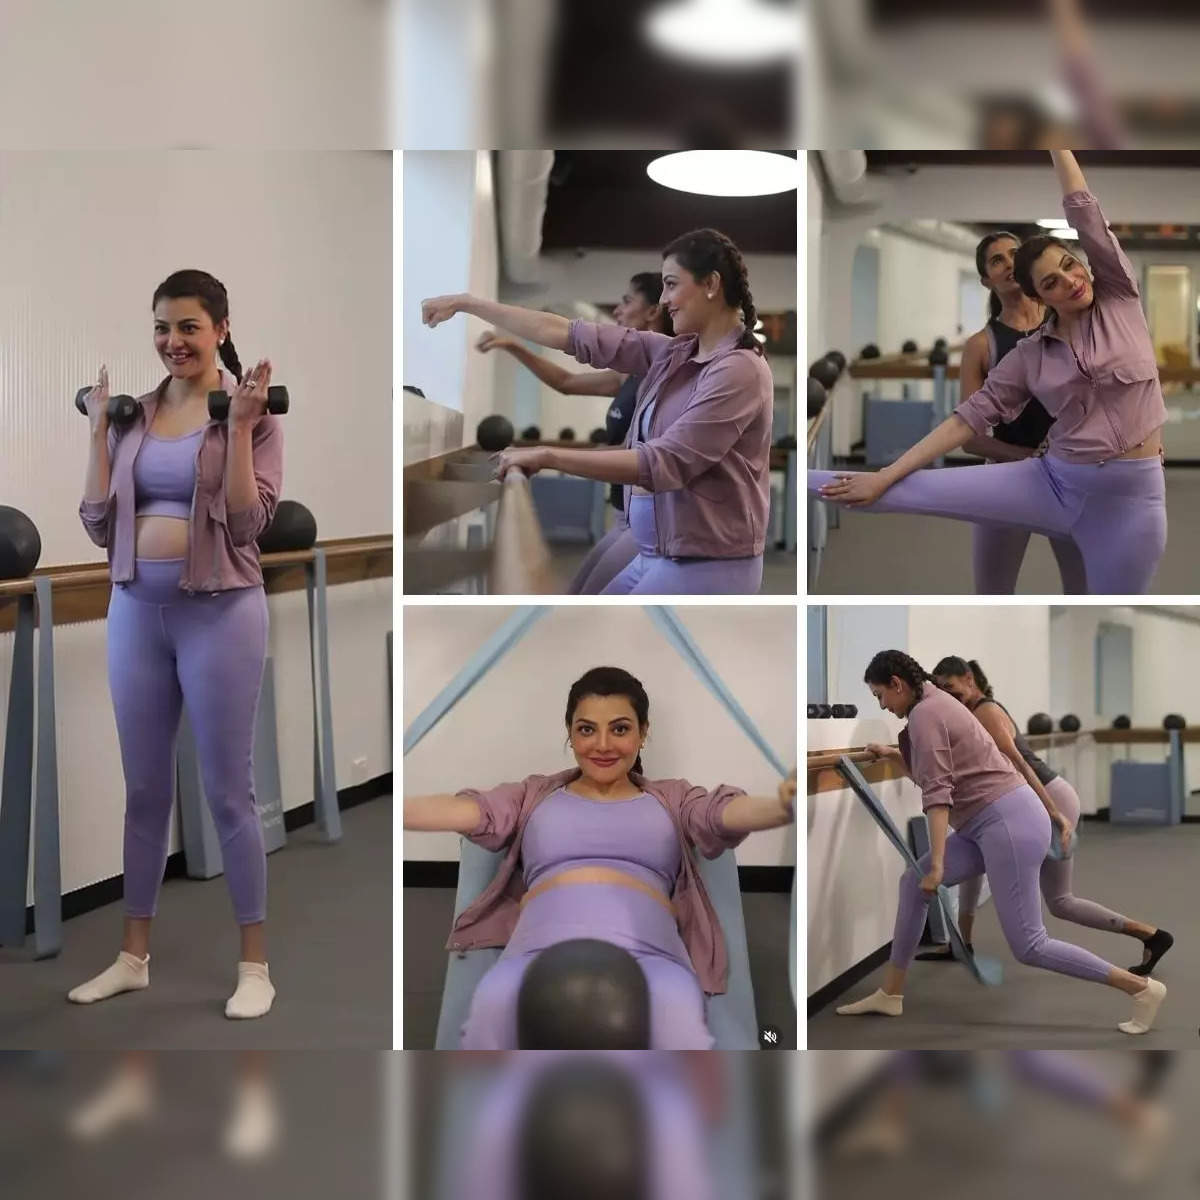 Kajal Ki Bf Videos - Kajal Aggarwal practises aerobic conditioning during pregnancy, says it  helps her feel stronger & leaner - The Economic Times